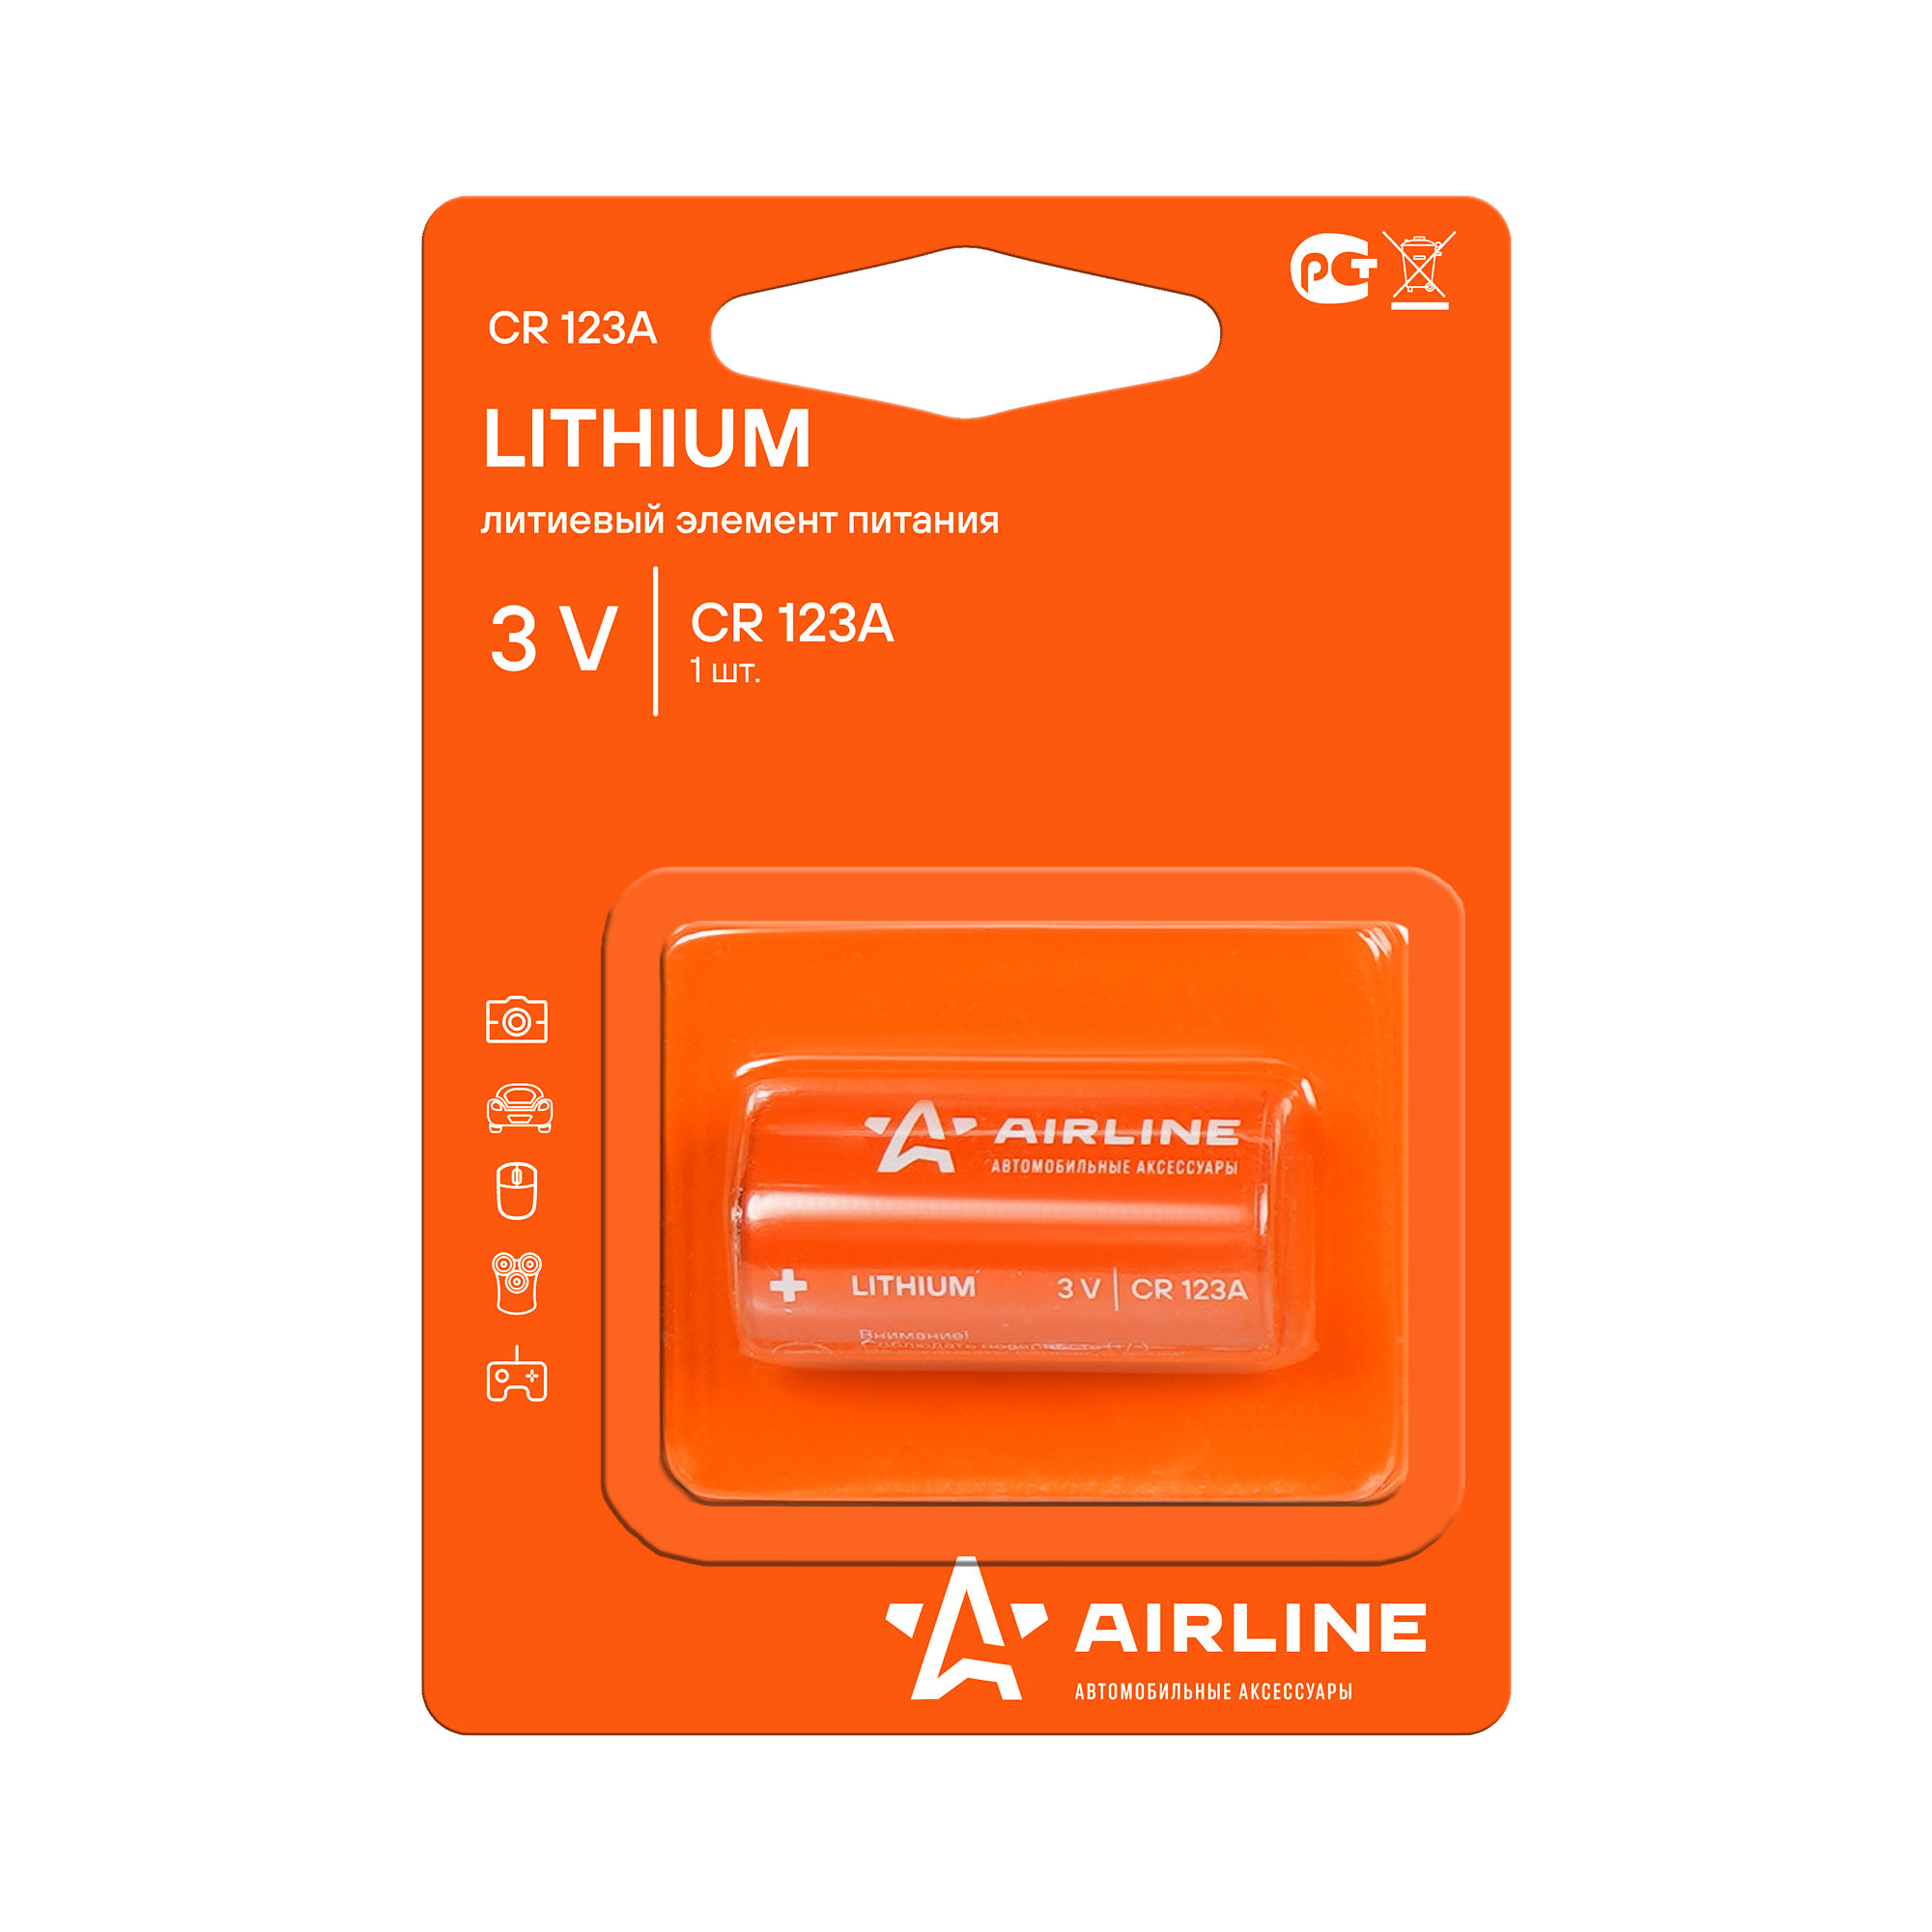 Батарейка литиевая AIRLINE Lithium CR123A 3V упаковка 1 шт. CR123A-01